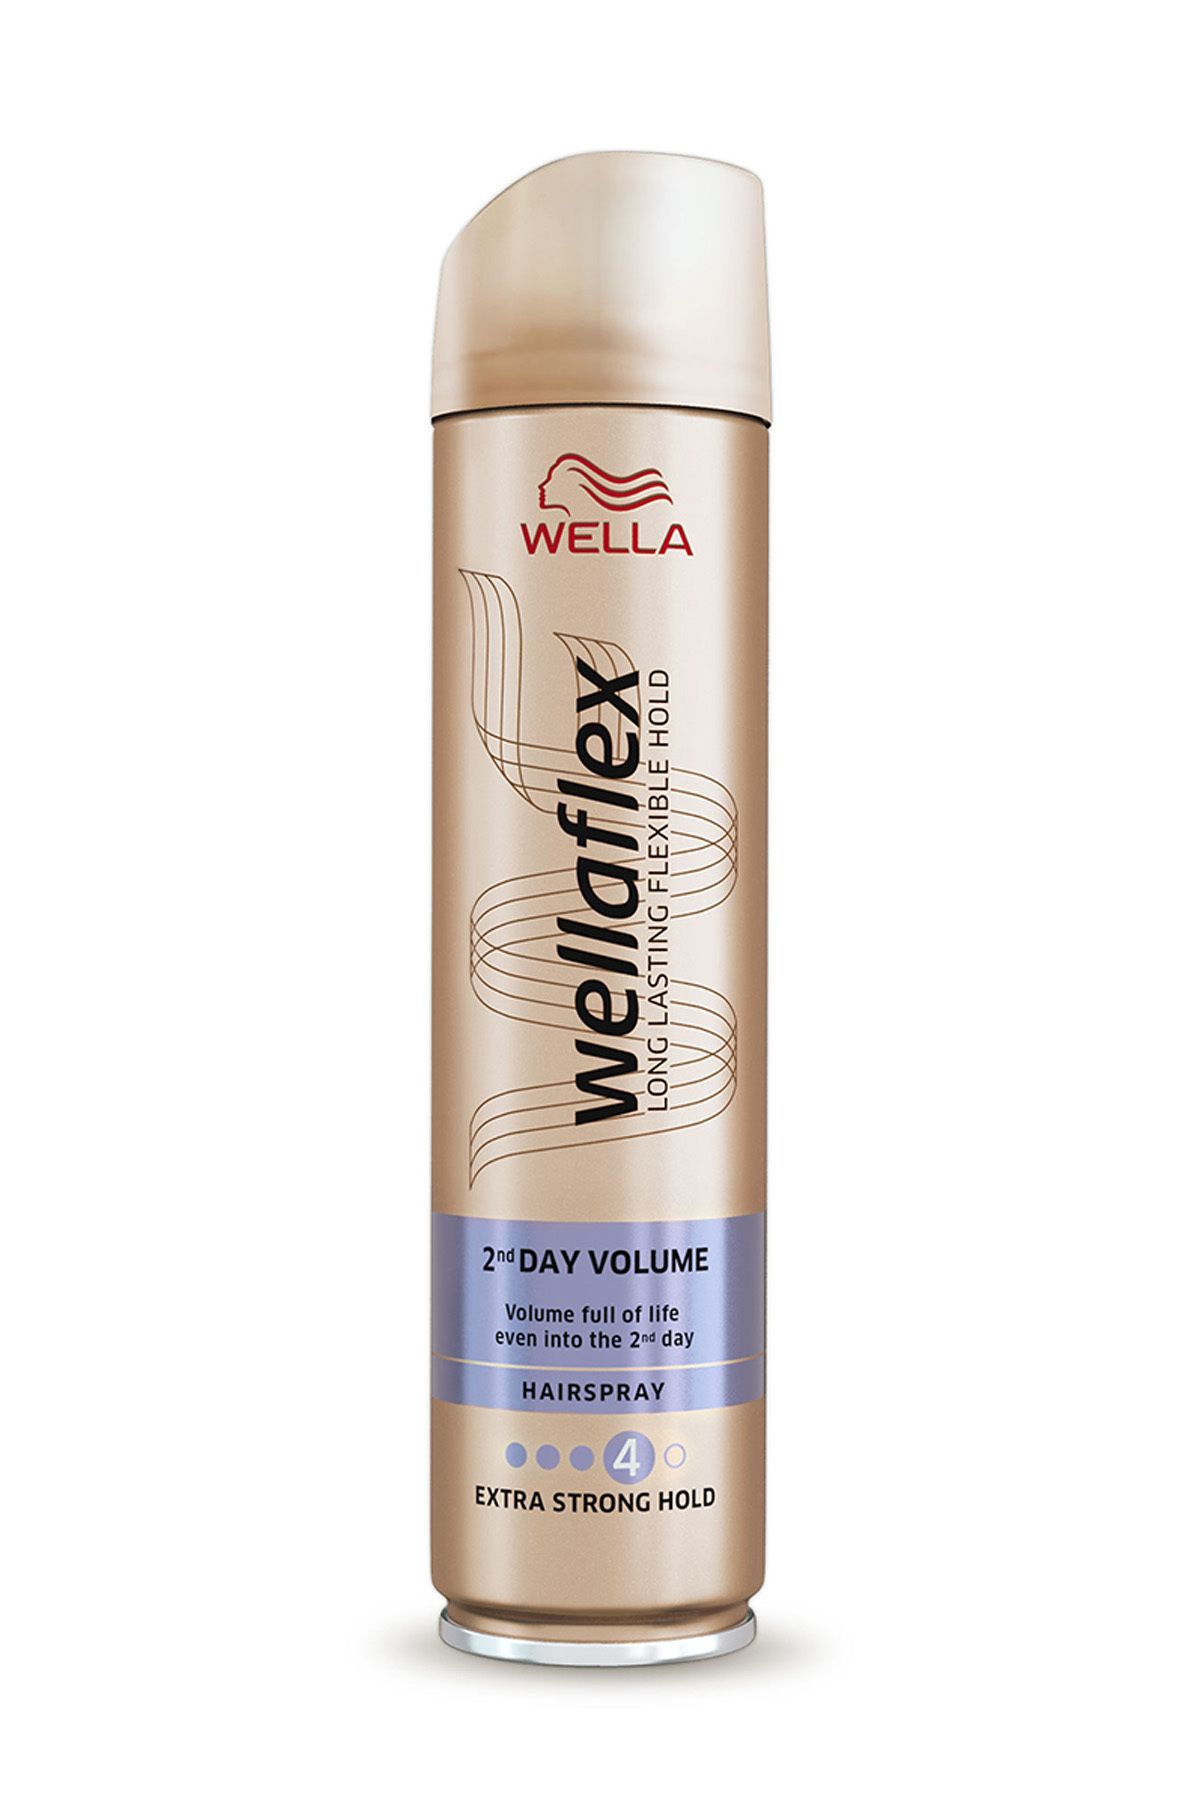 Wella Wellaflex 2nd Day Volume Extra Strong Hold Saç Spreyi - 250 ml